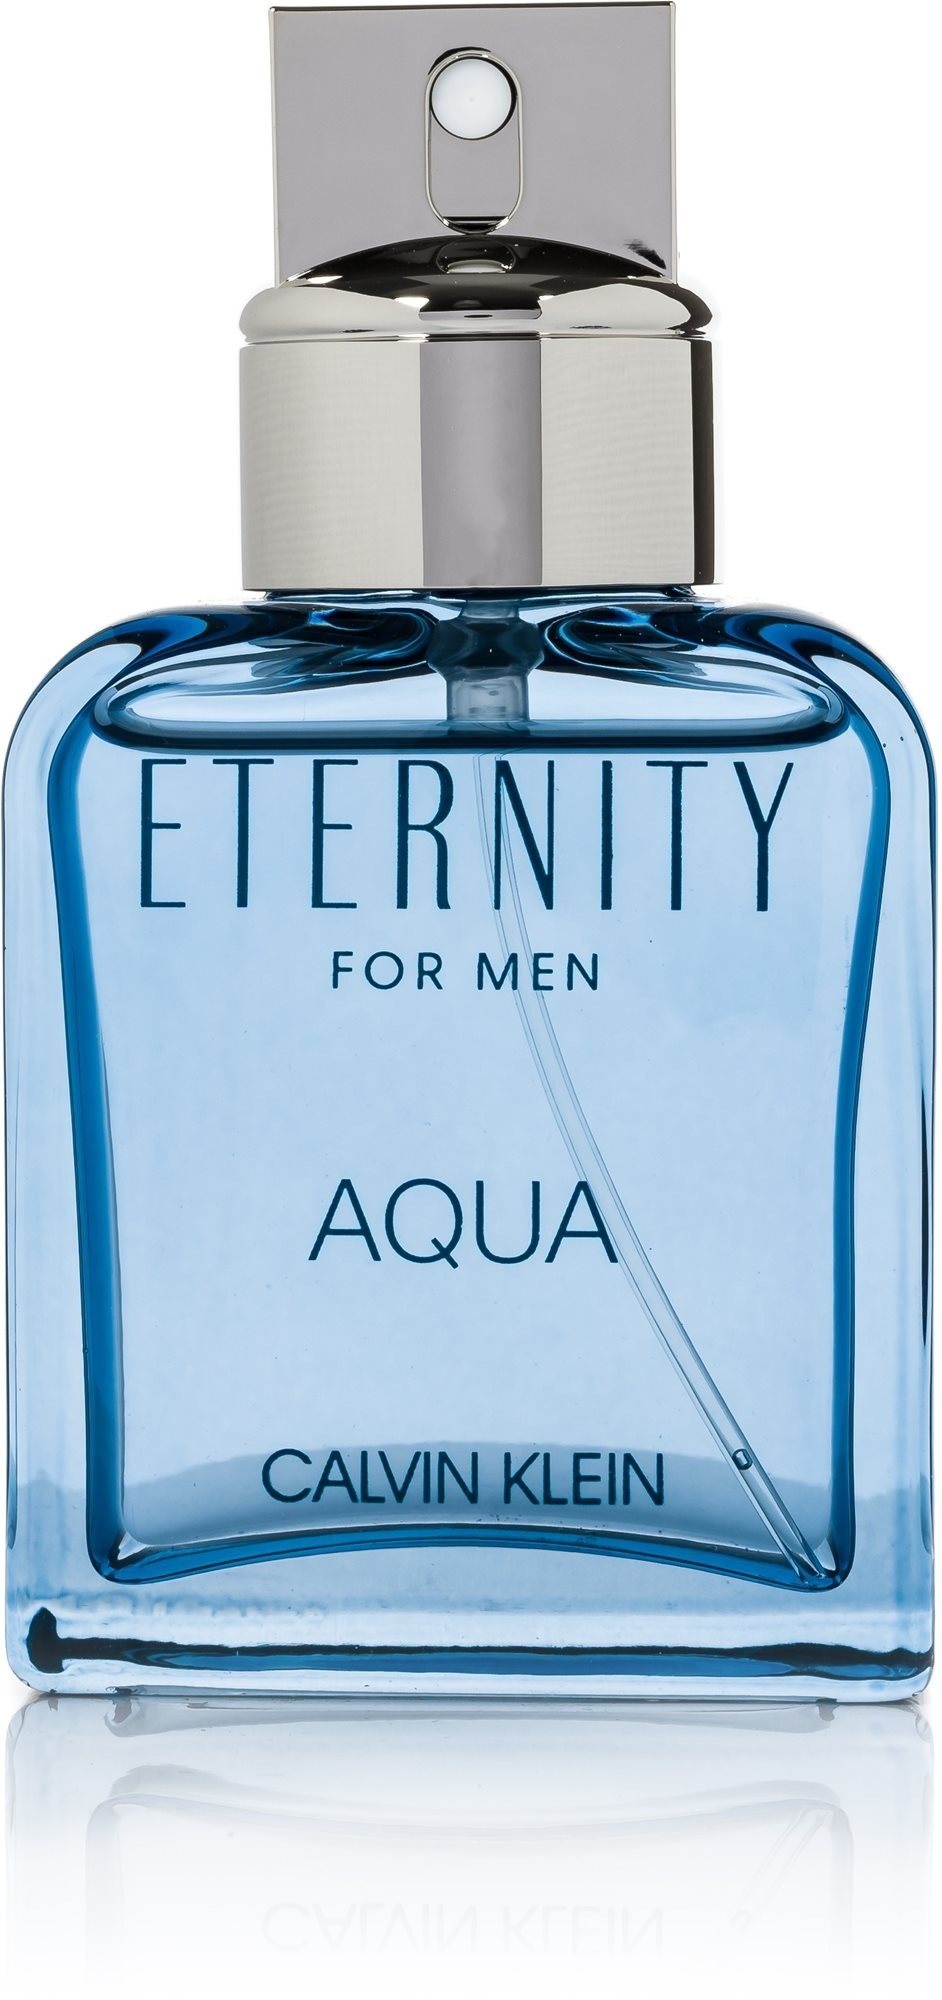 CALVIN KLEIN Eternity for Men Aqua EdT